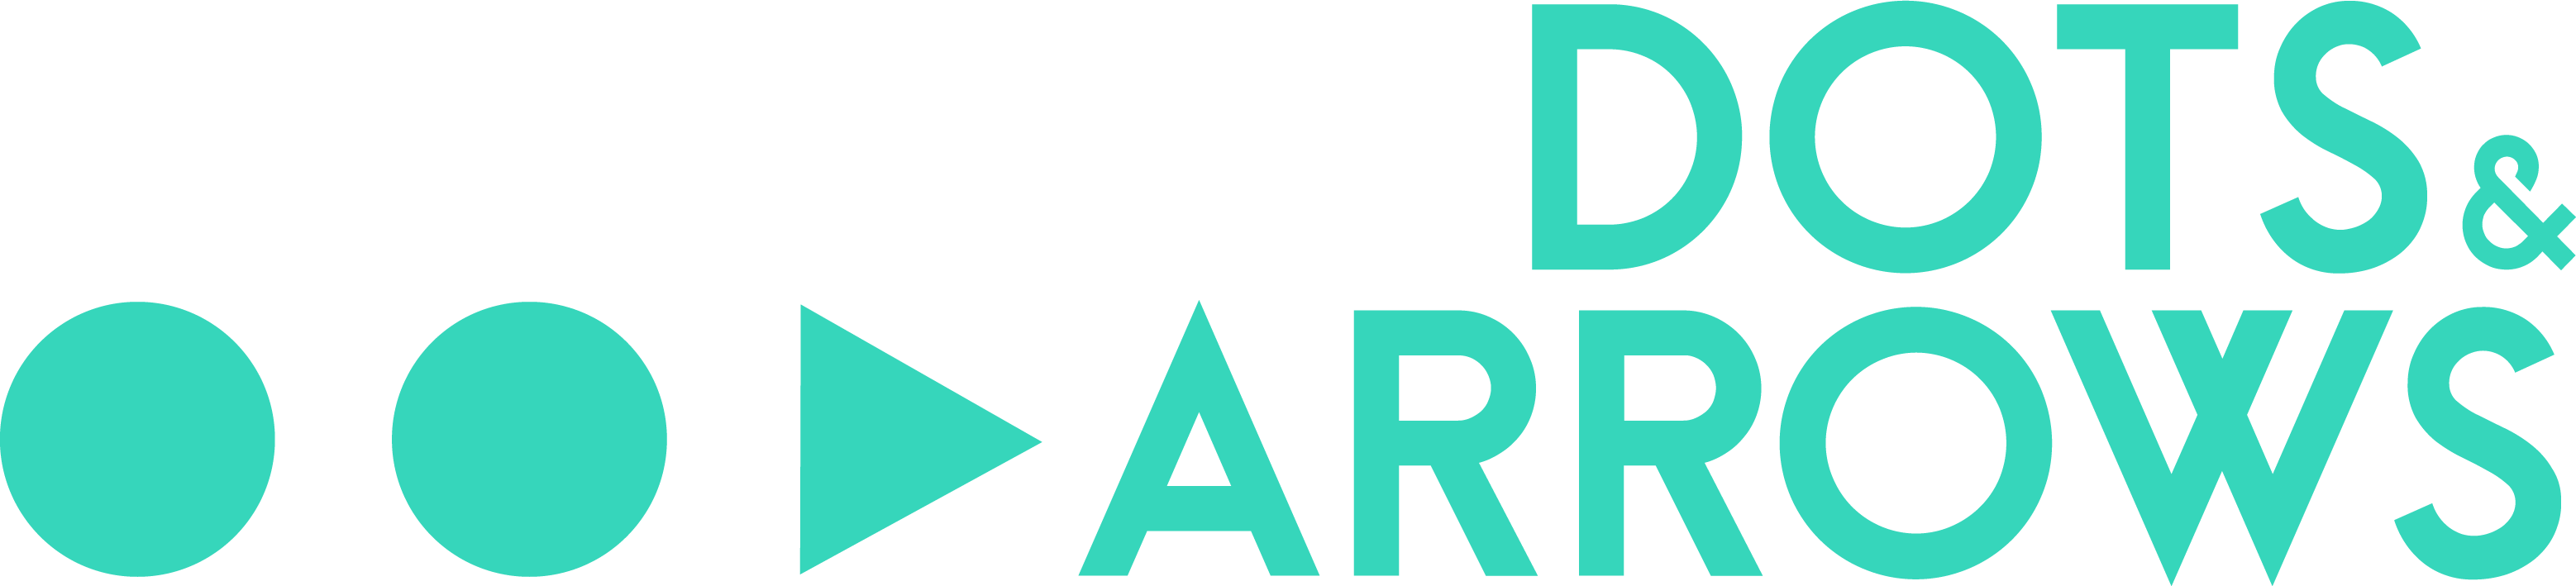 Dots & Arrows logo